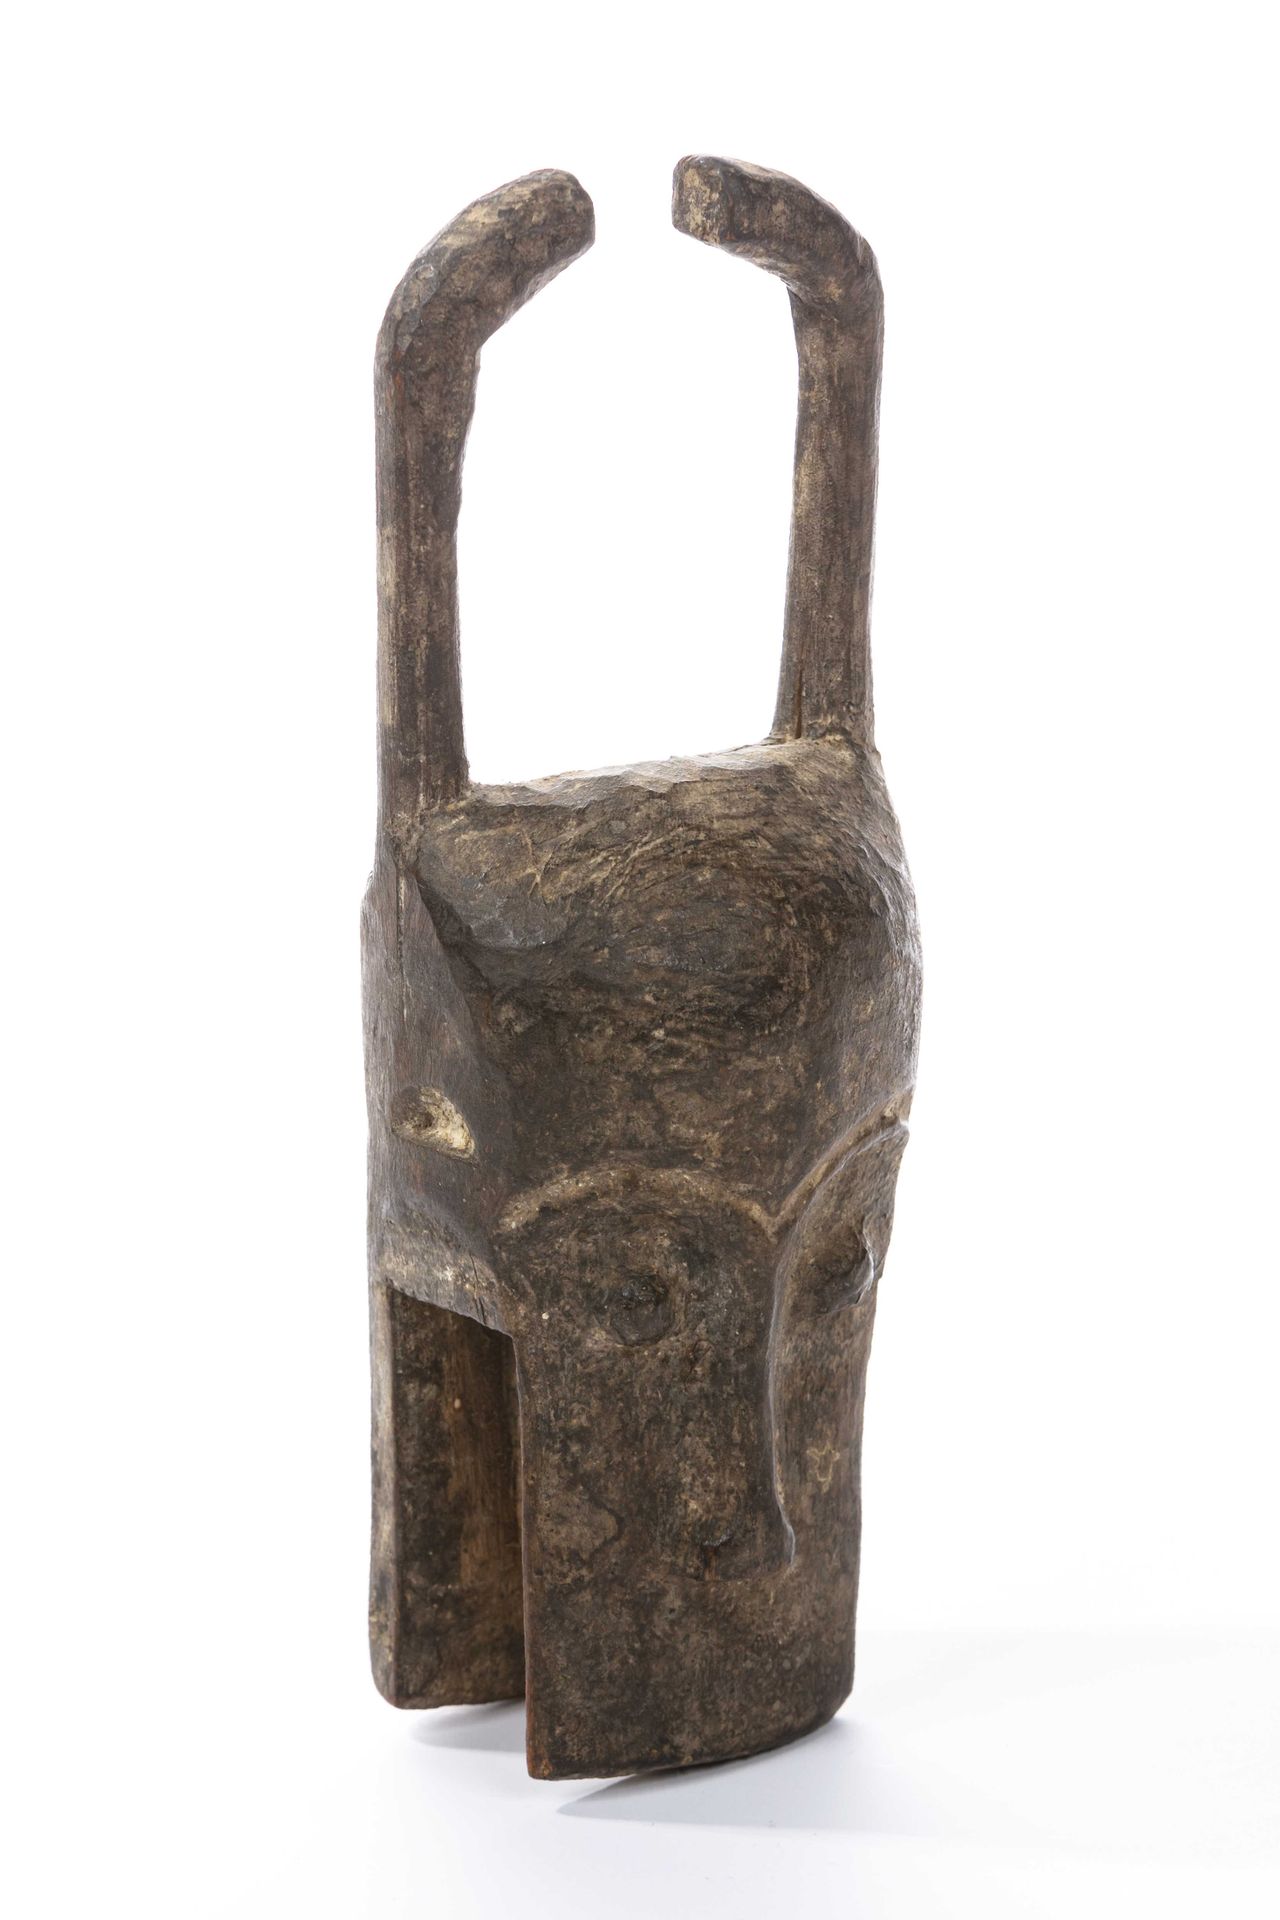 Null Baoule/ Yaoure style mask Ivory Coast 
Wood 
H: 19 cm
Description: Long rec&hellip;